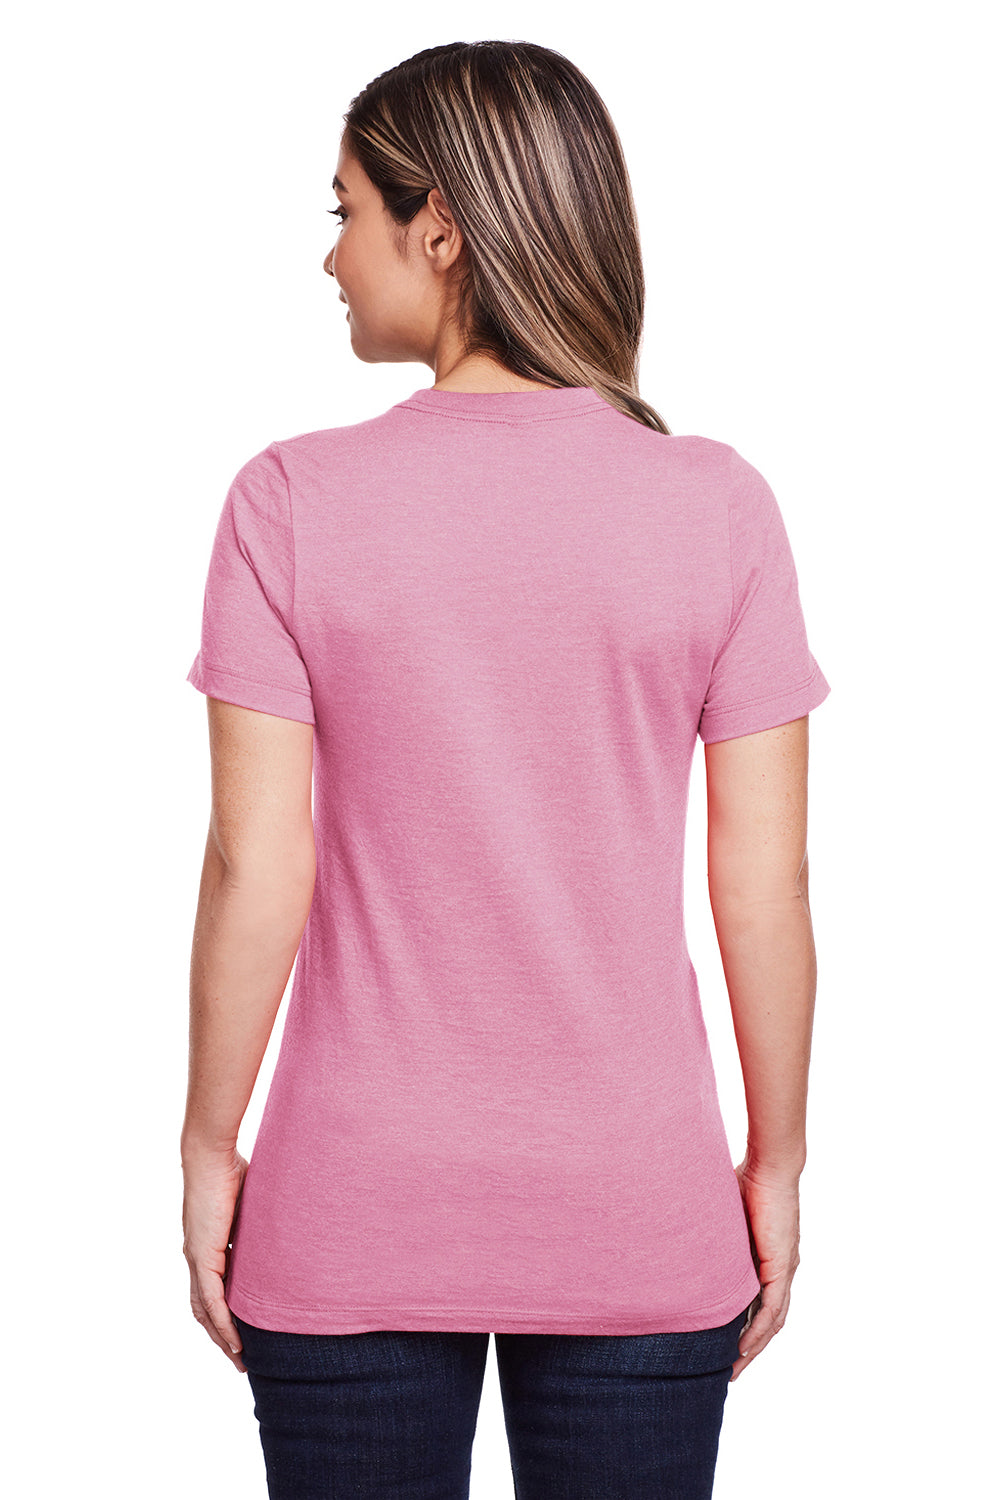 Gildan G670L Womens Softstyle CVC Short Sleeve Crewneck T-Shirt Plumrose Pink Back